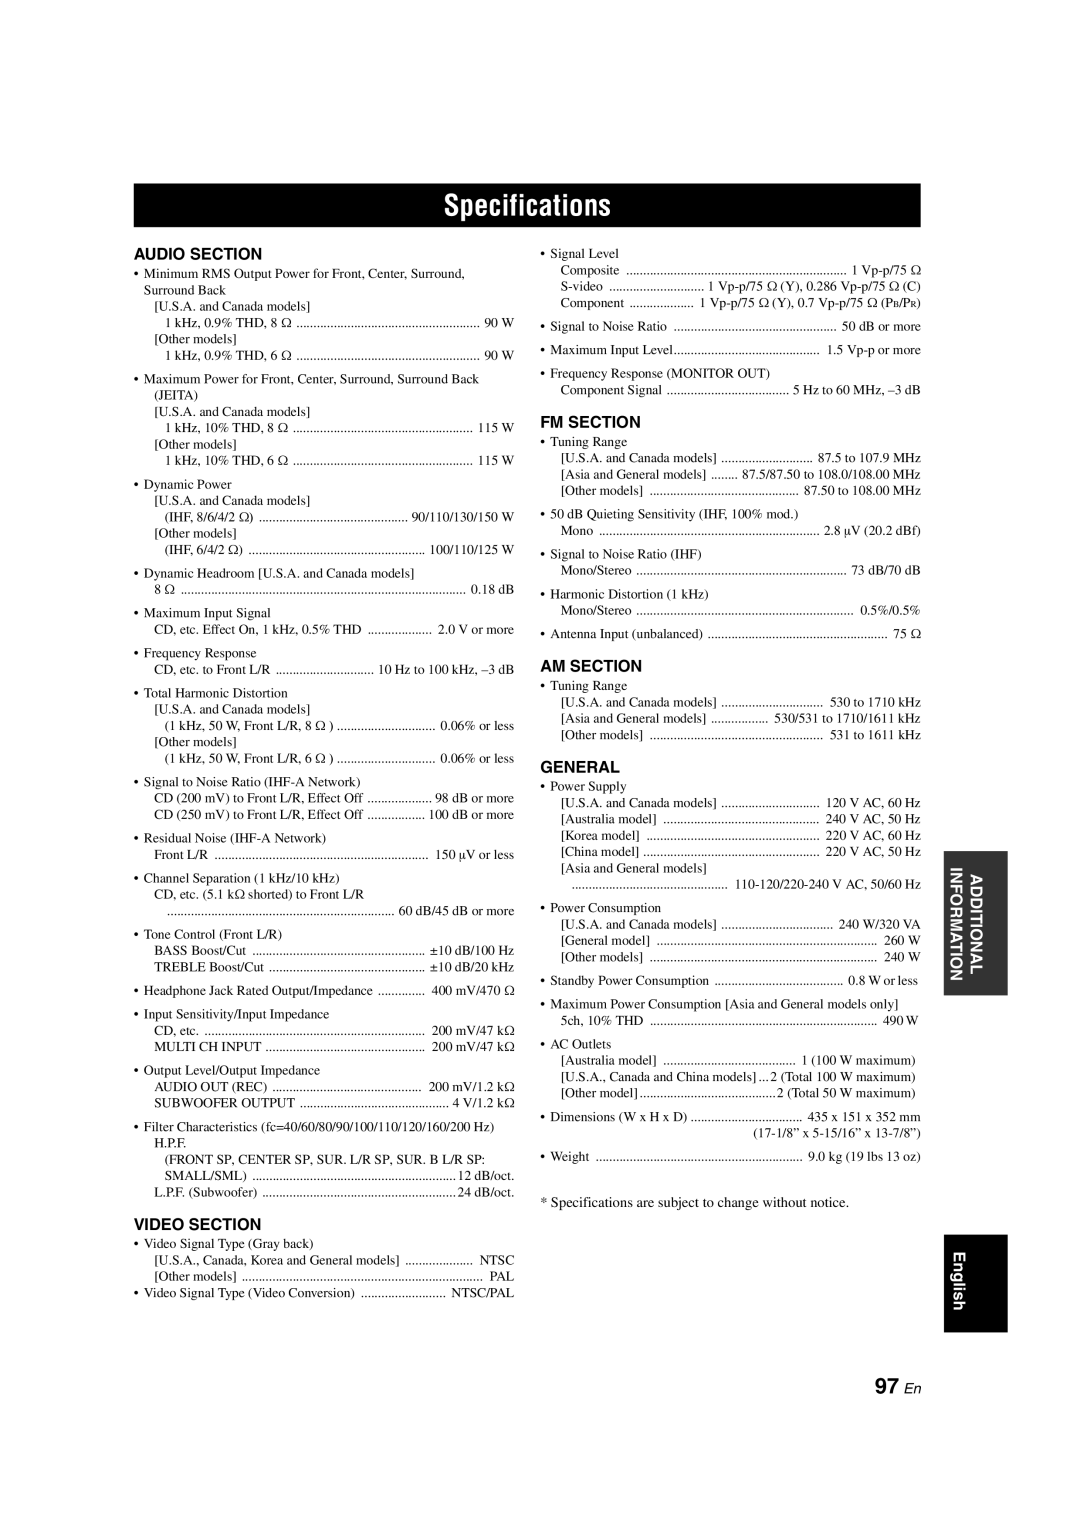 Yamaha HTR-6150 owner manual Specifications, 97 En 